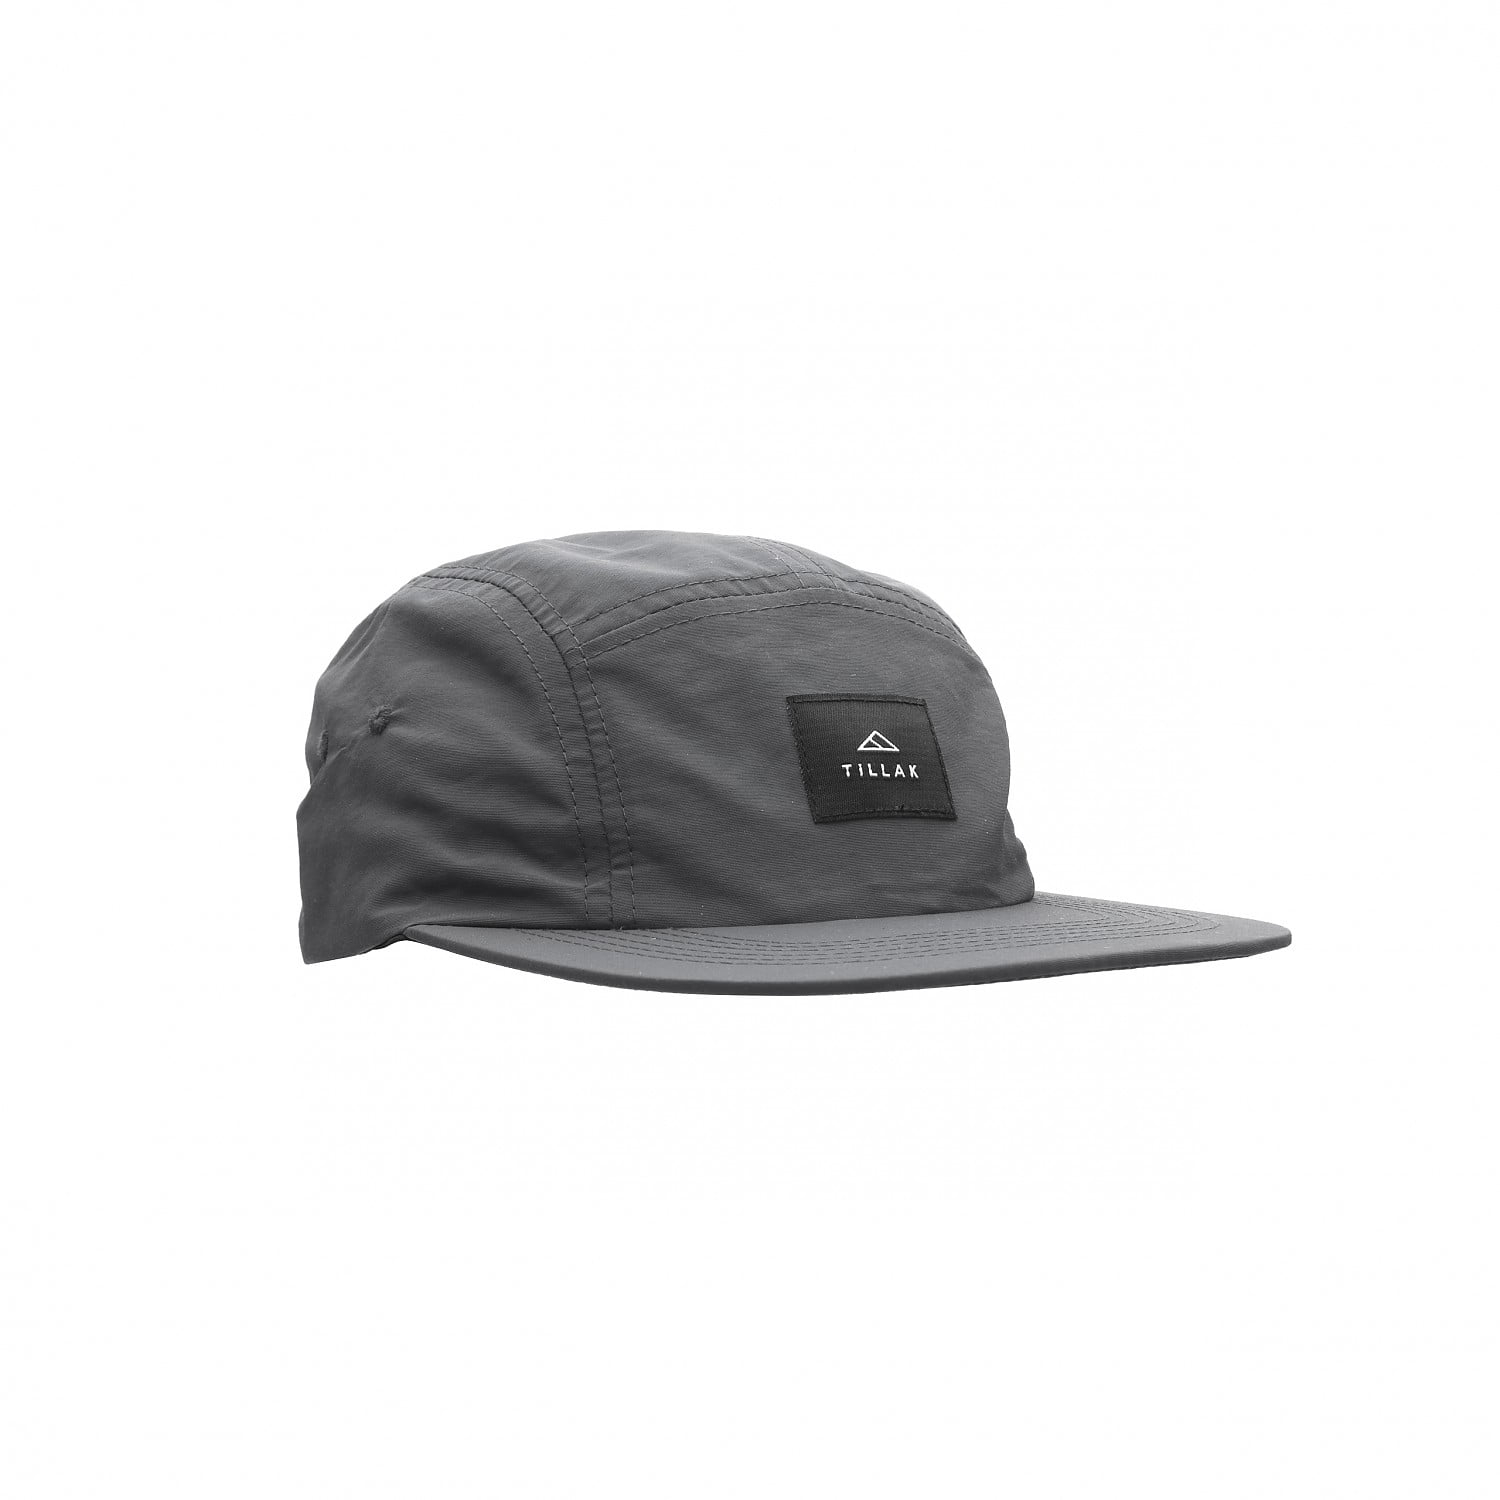 Tillak Wallowa Camp Hat, Lightweight Nylon 5 Panel Cap with Snap ...